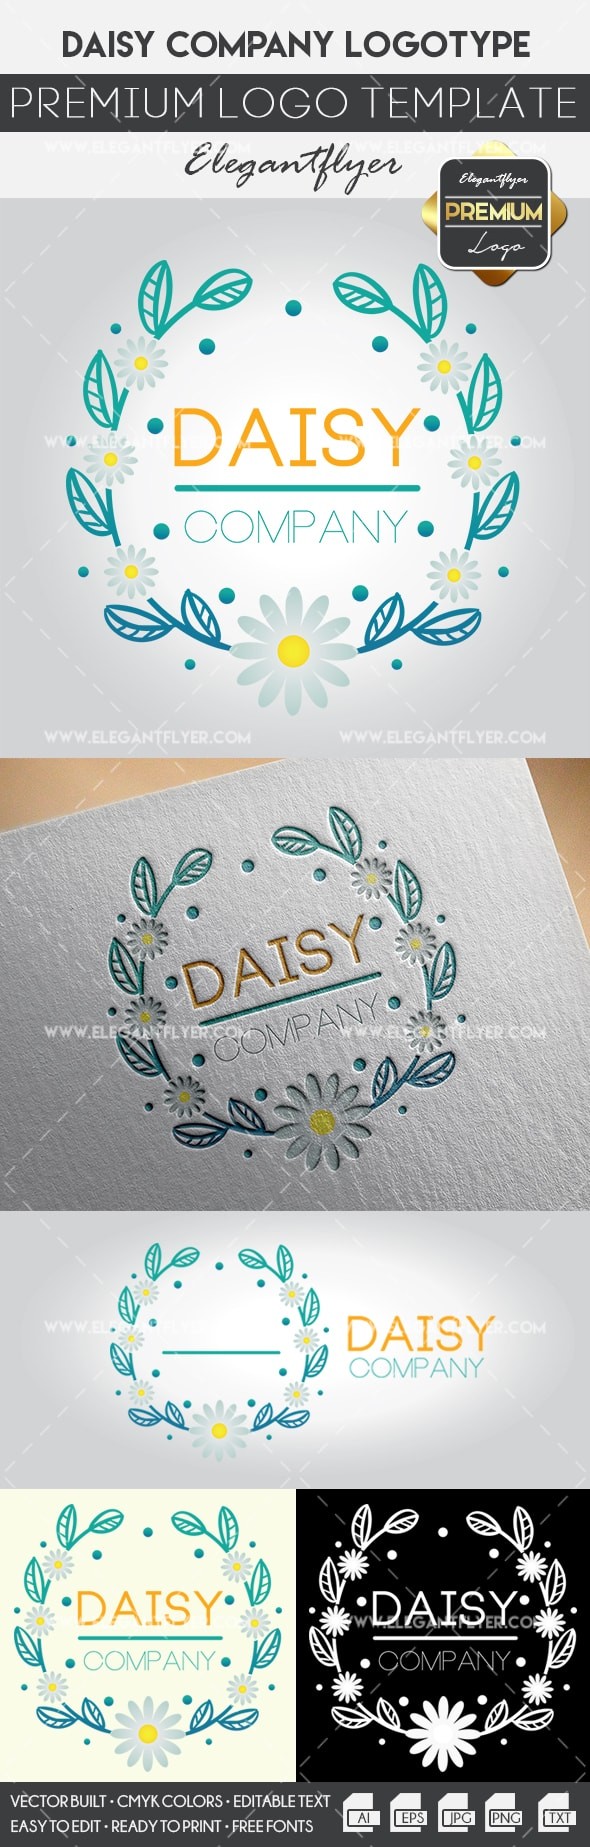 Daisy Company II Daisy Unternehmen by ElegantFlyer